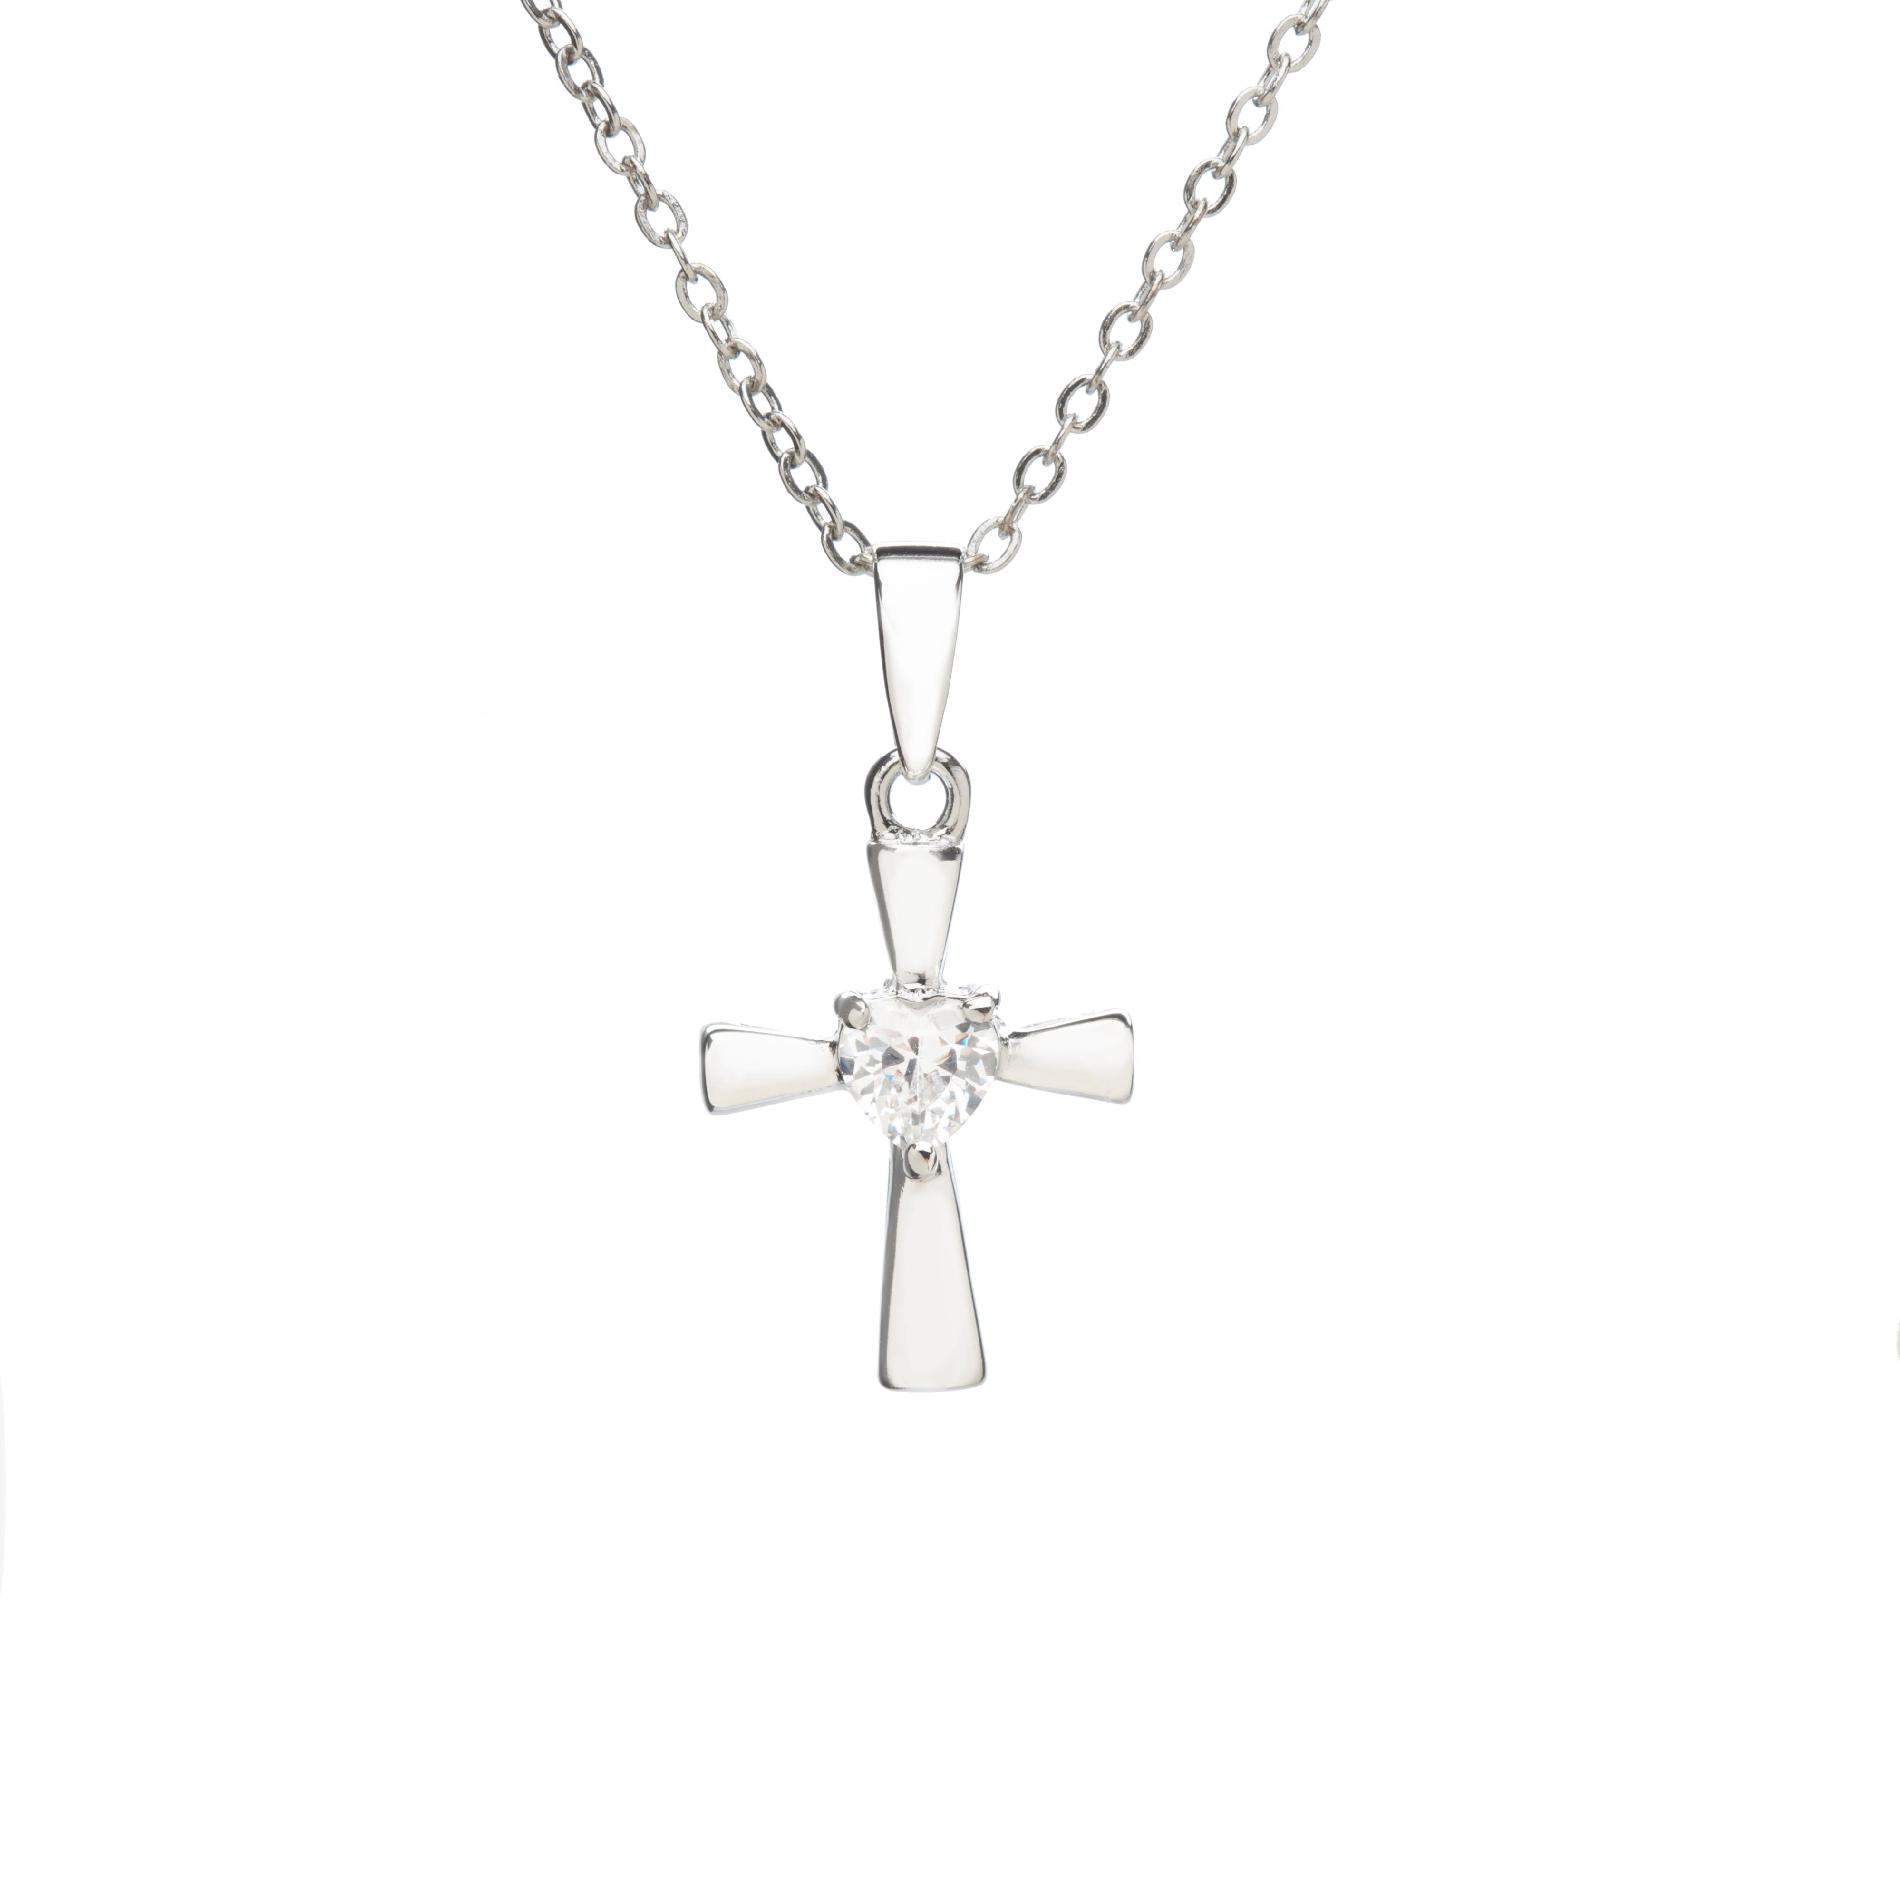 Womens Cross Pendant Necklace | Kmart.com